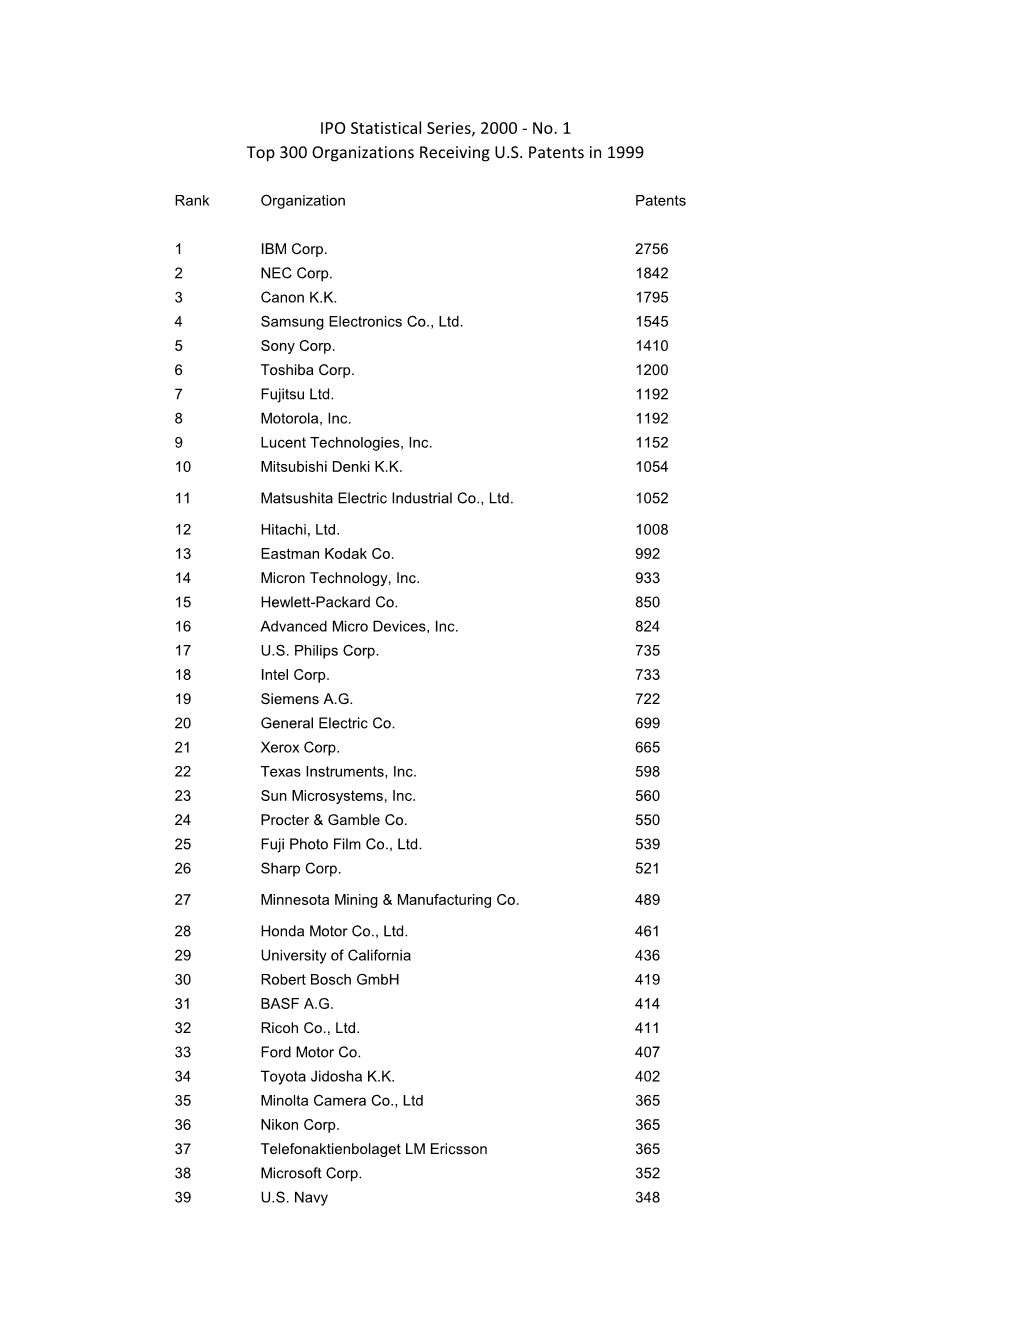 (Top 300 Organizations) Numerical